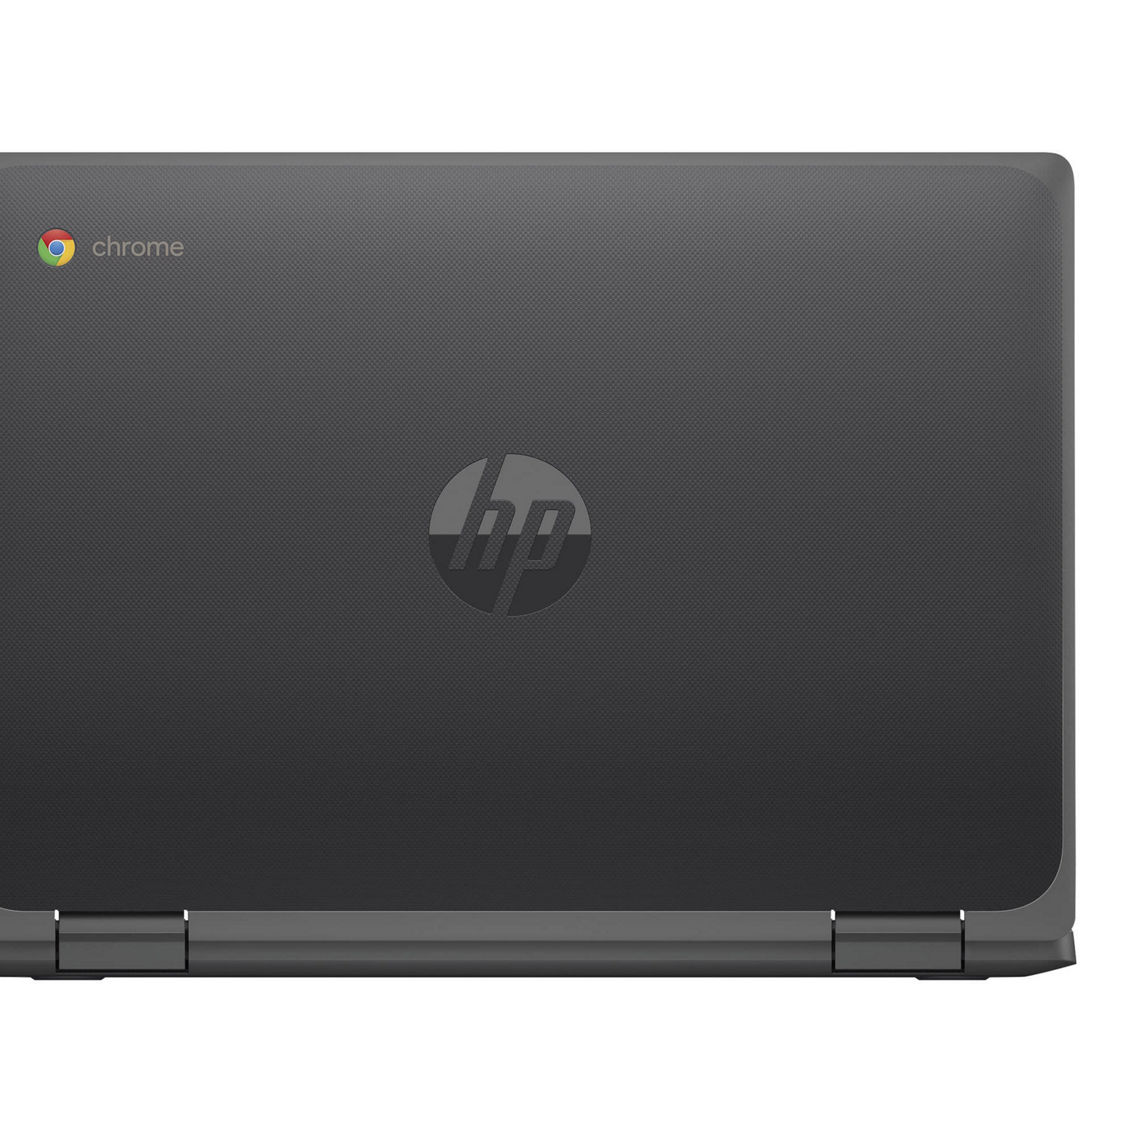 HP Chromebook X360 11 G3 Celeron N4020 1.1GHz 4GB 32GB SSD Laptop (Refurbished) - Image 2 of 4